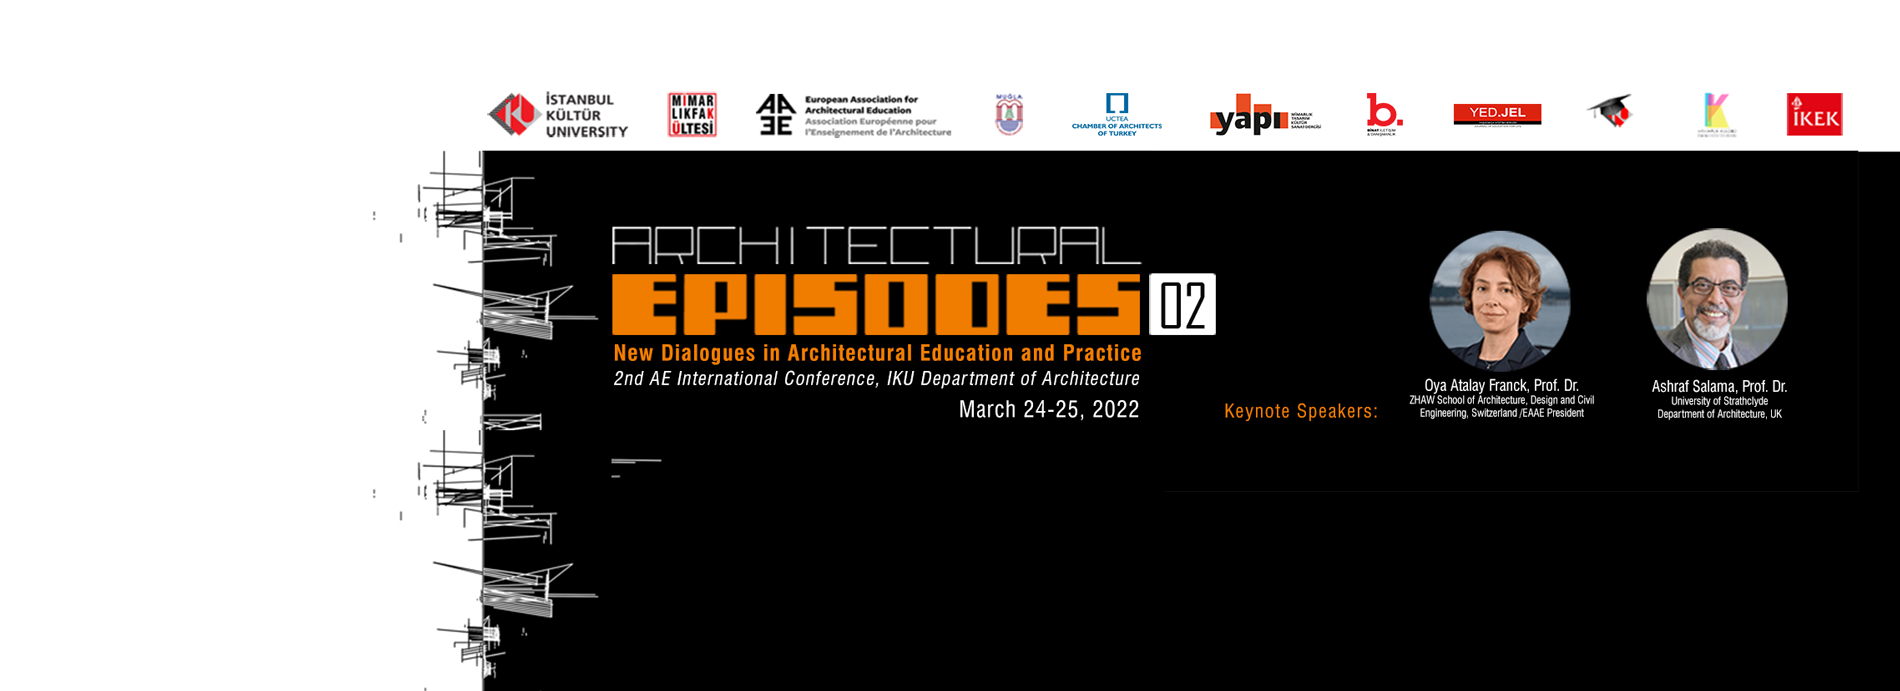 ARCHITECTURAL EPISODES 02 Symposium